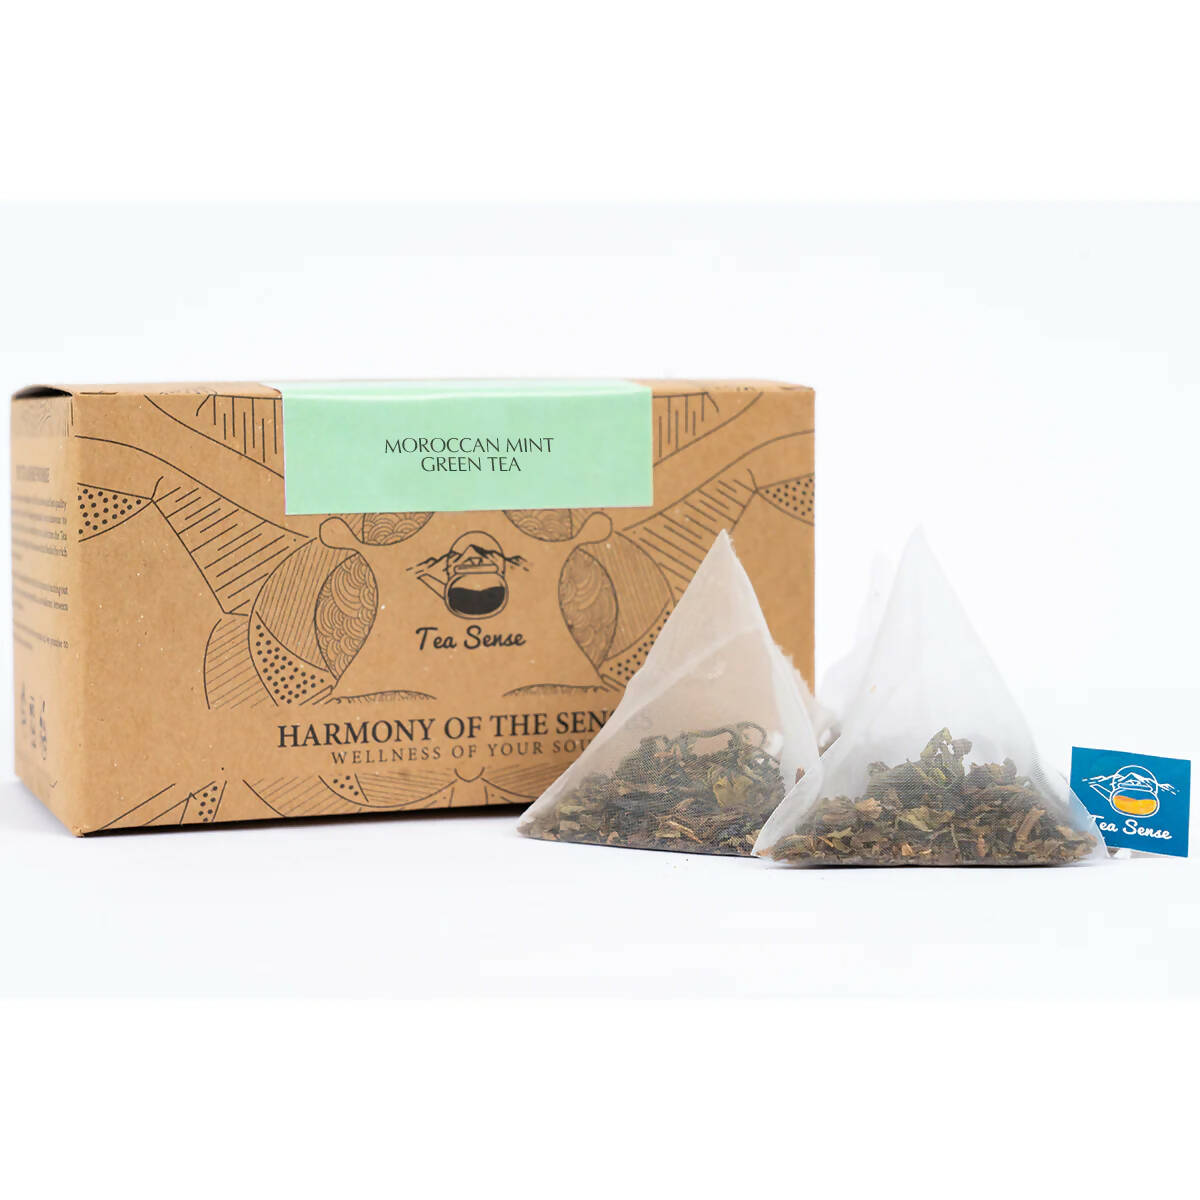 Tea Sense Moroccan Mint Green Tea Bags Box - buy in USA, Australia, Canada